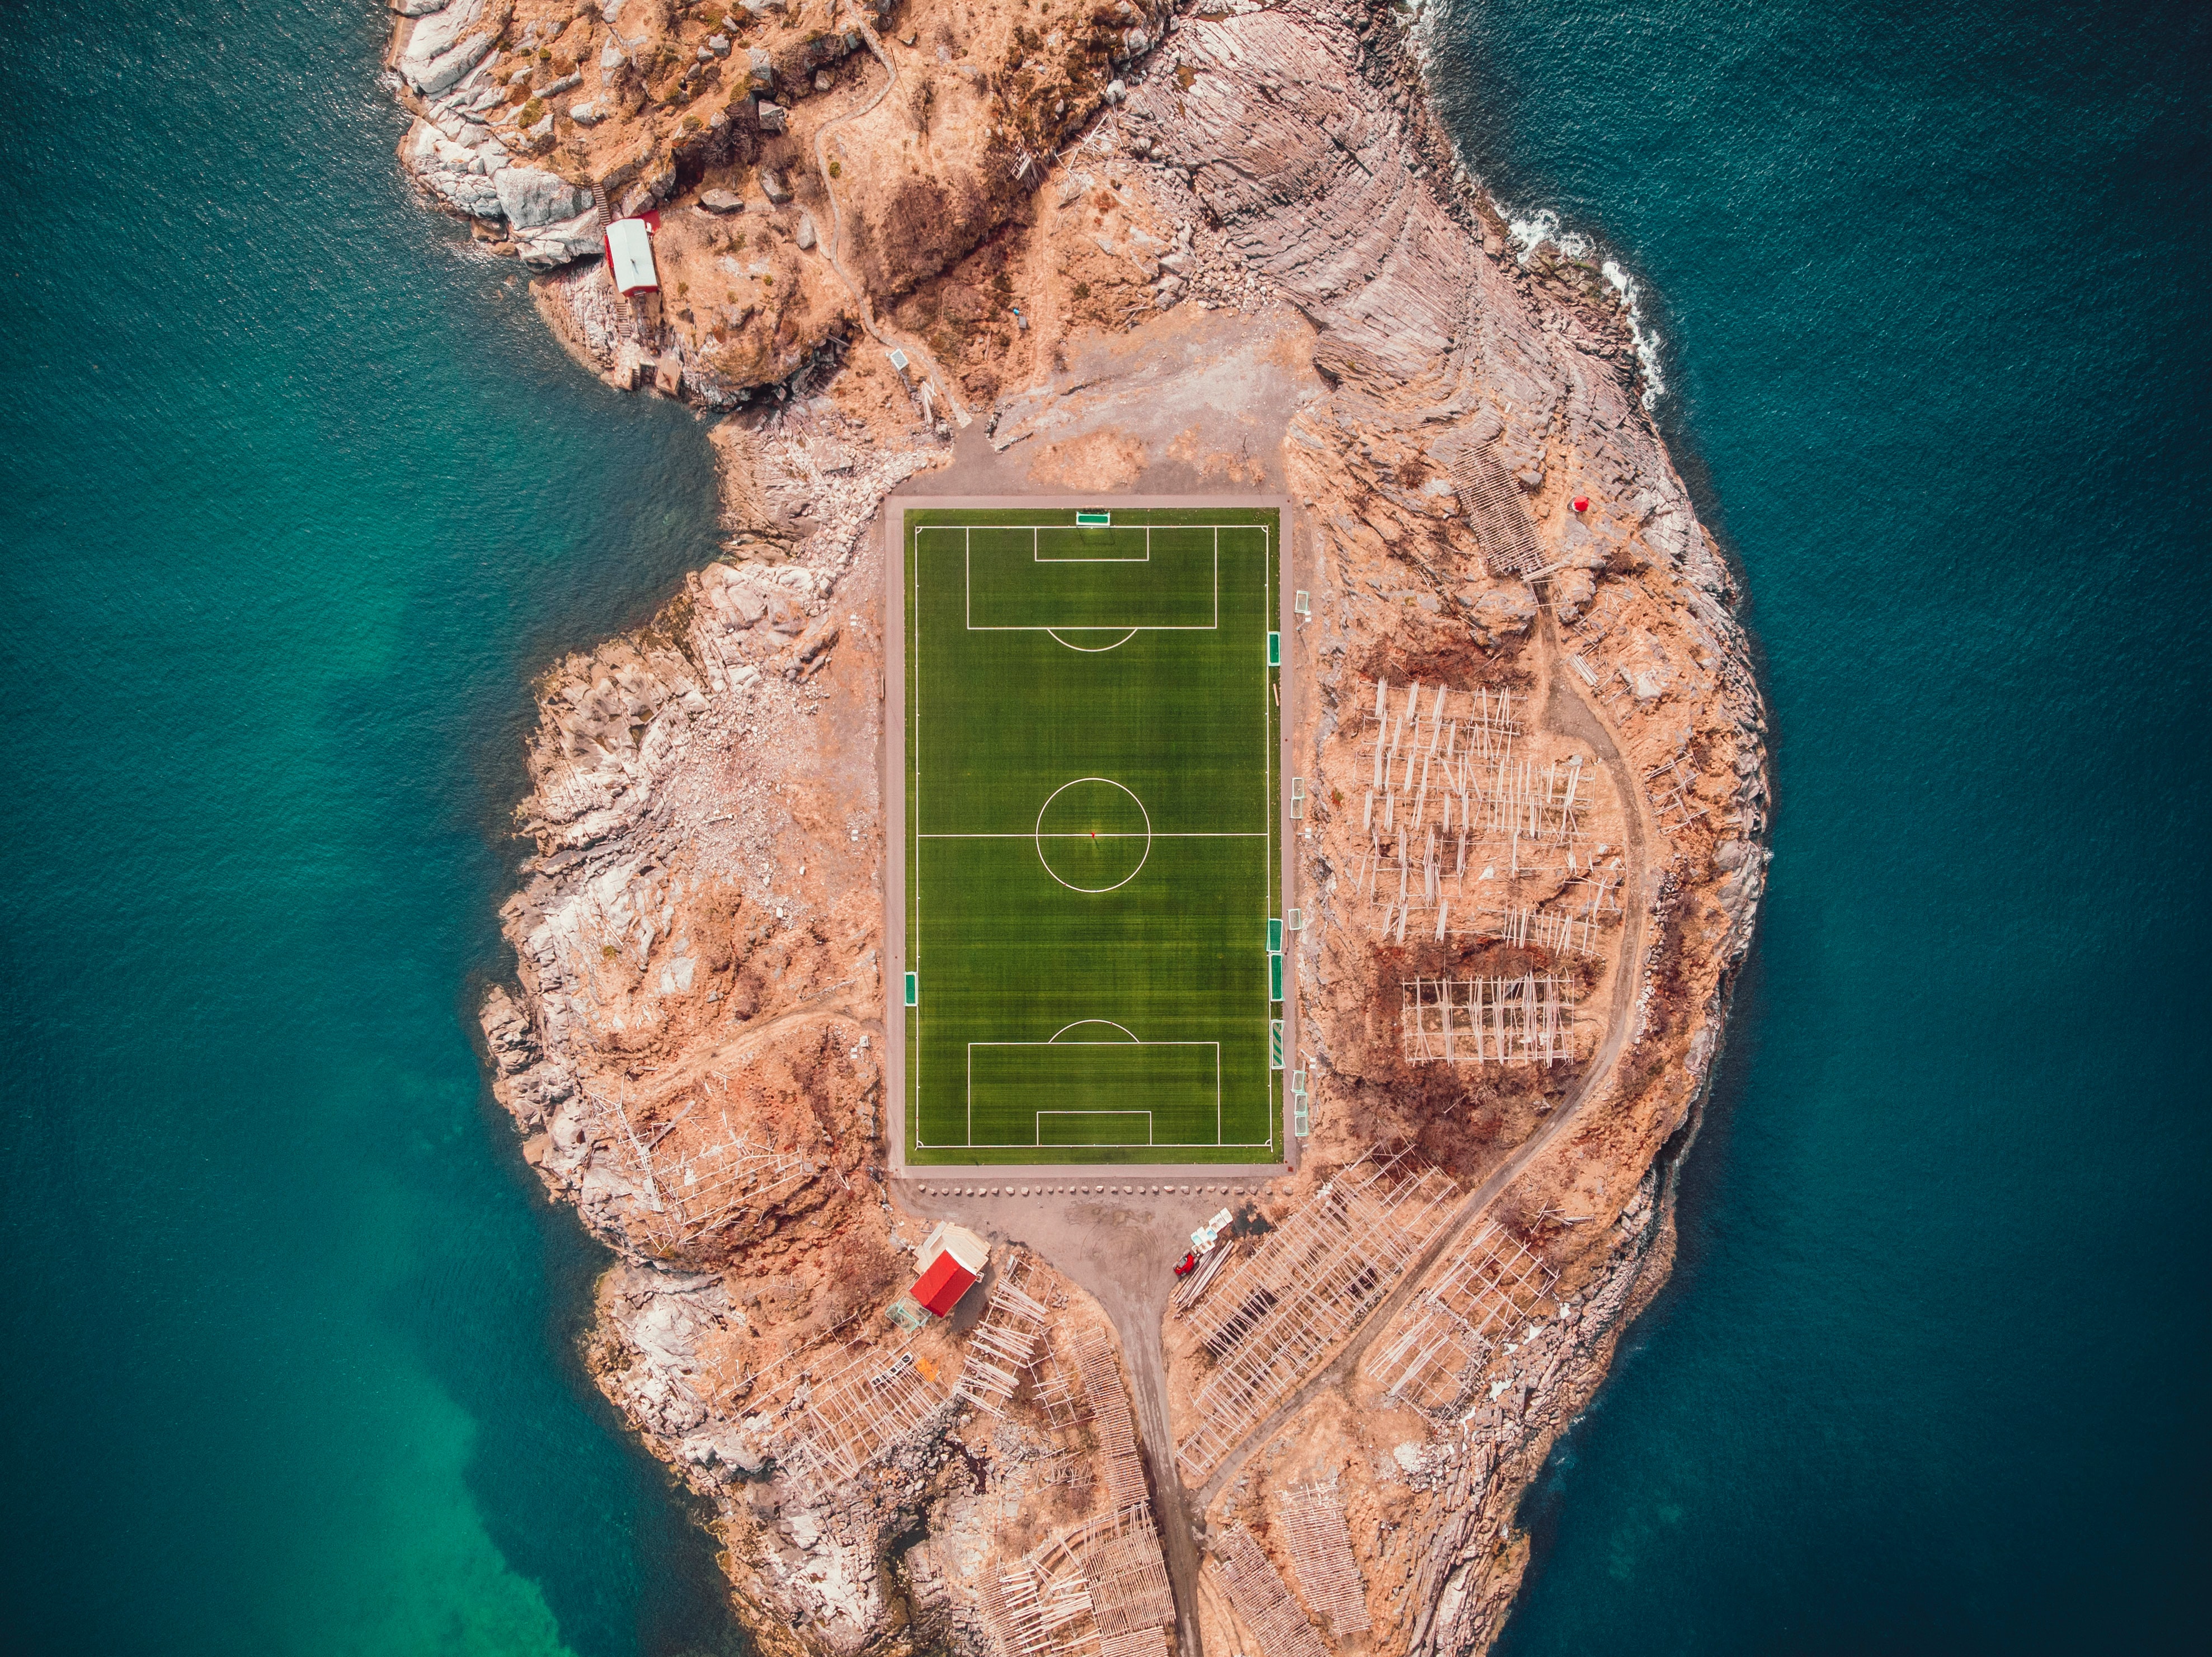 Lofoten Islands Soccer Field Aerial View 3954x2962